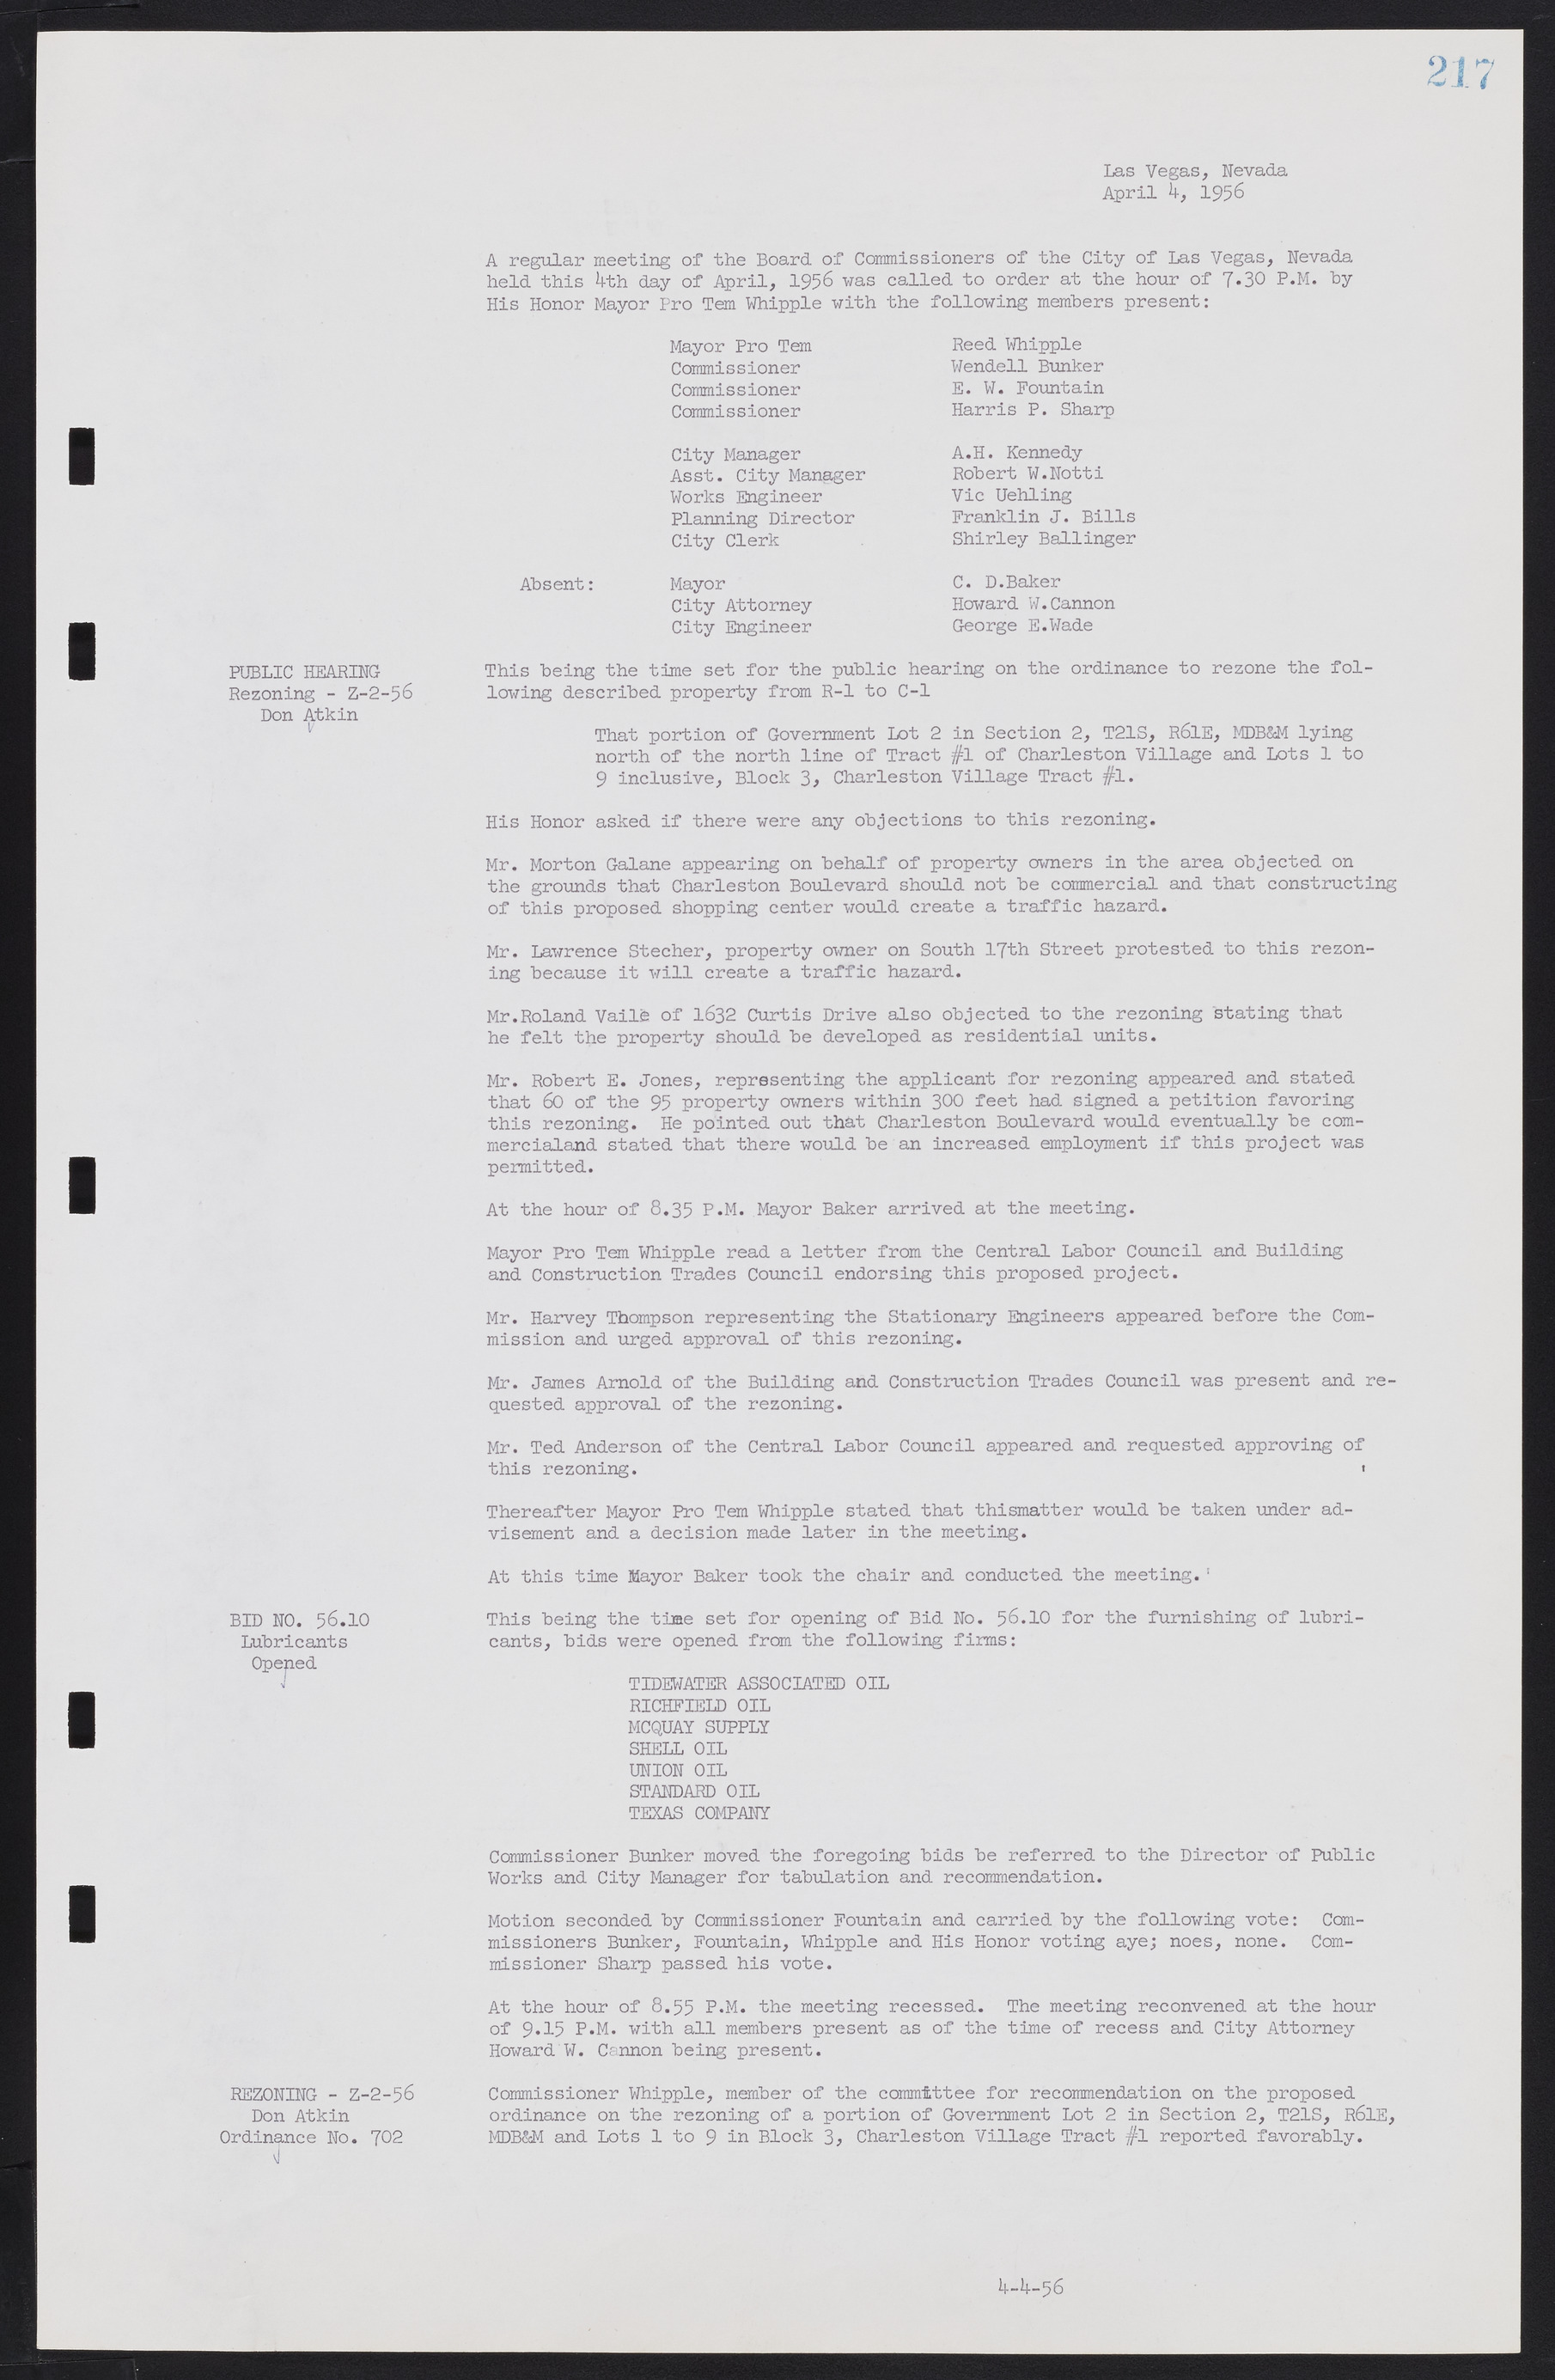 Las Vegas City Commission Minutes, September 21, 1955 to November 20, 1957, lvc000010-235